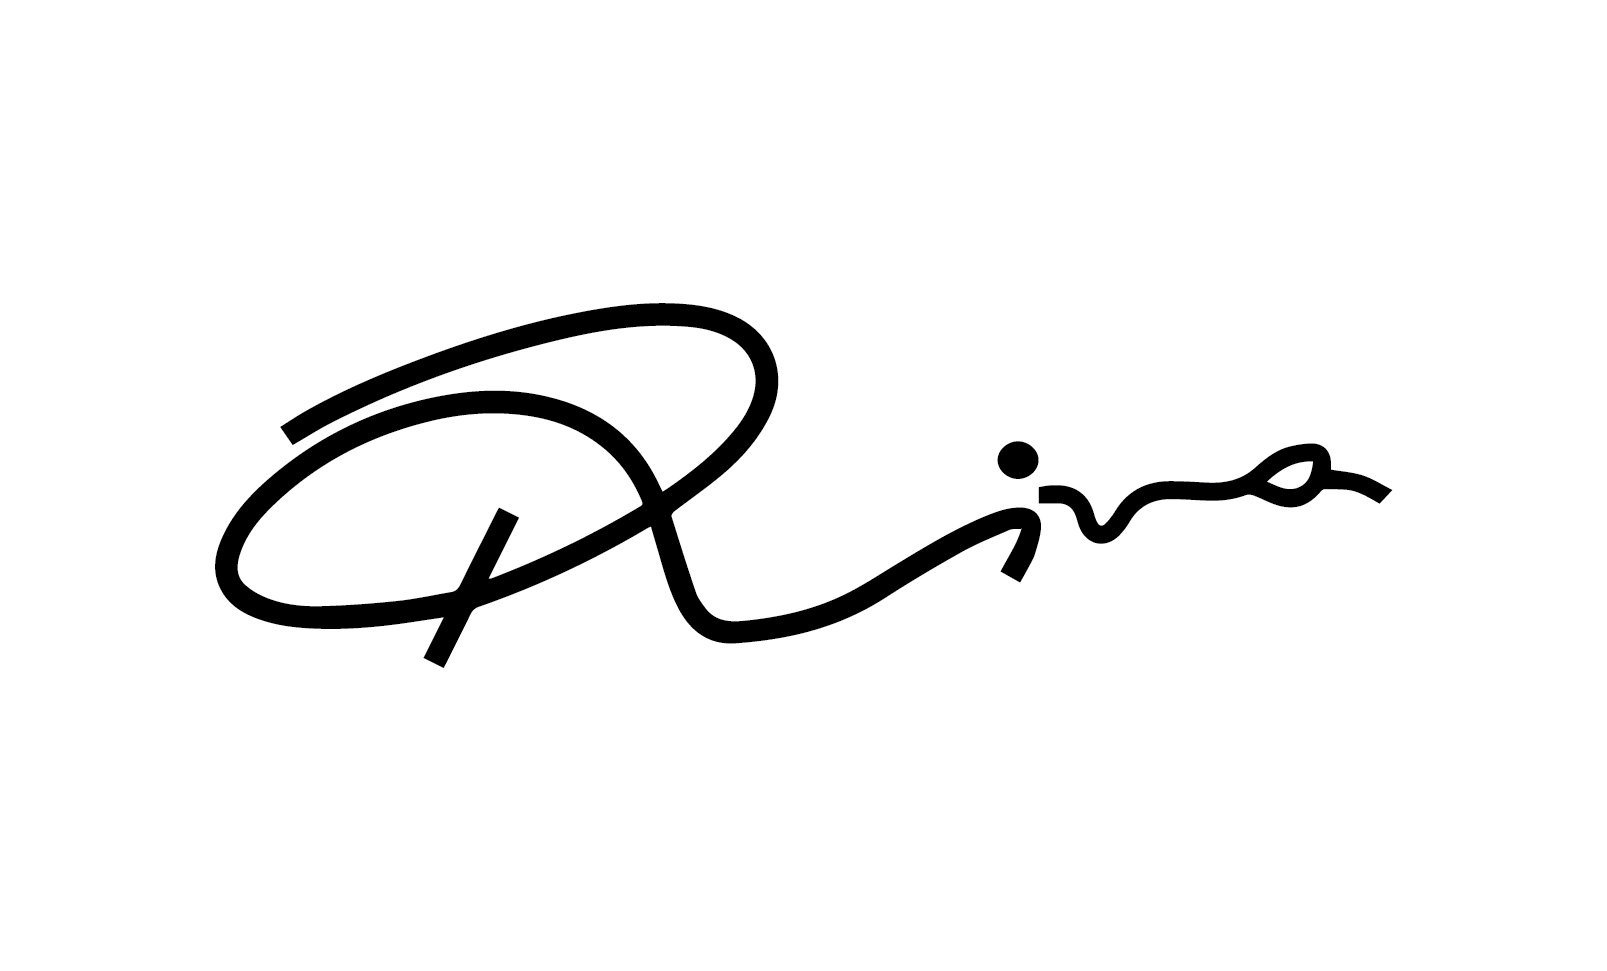 Logo Rivas